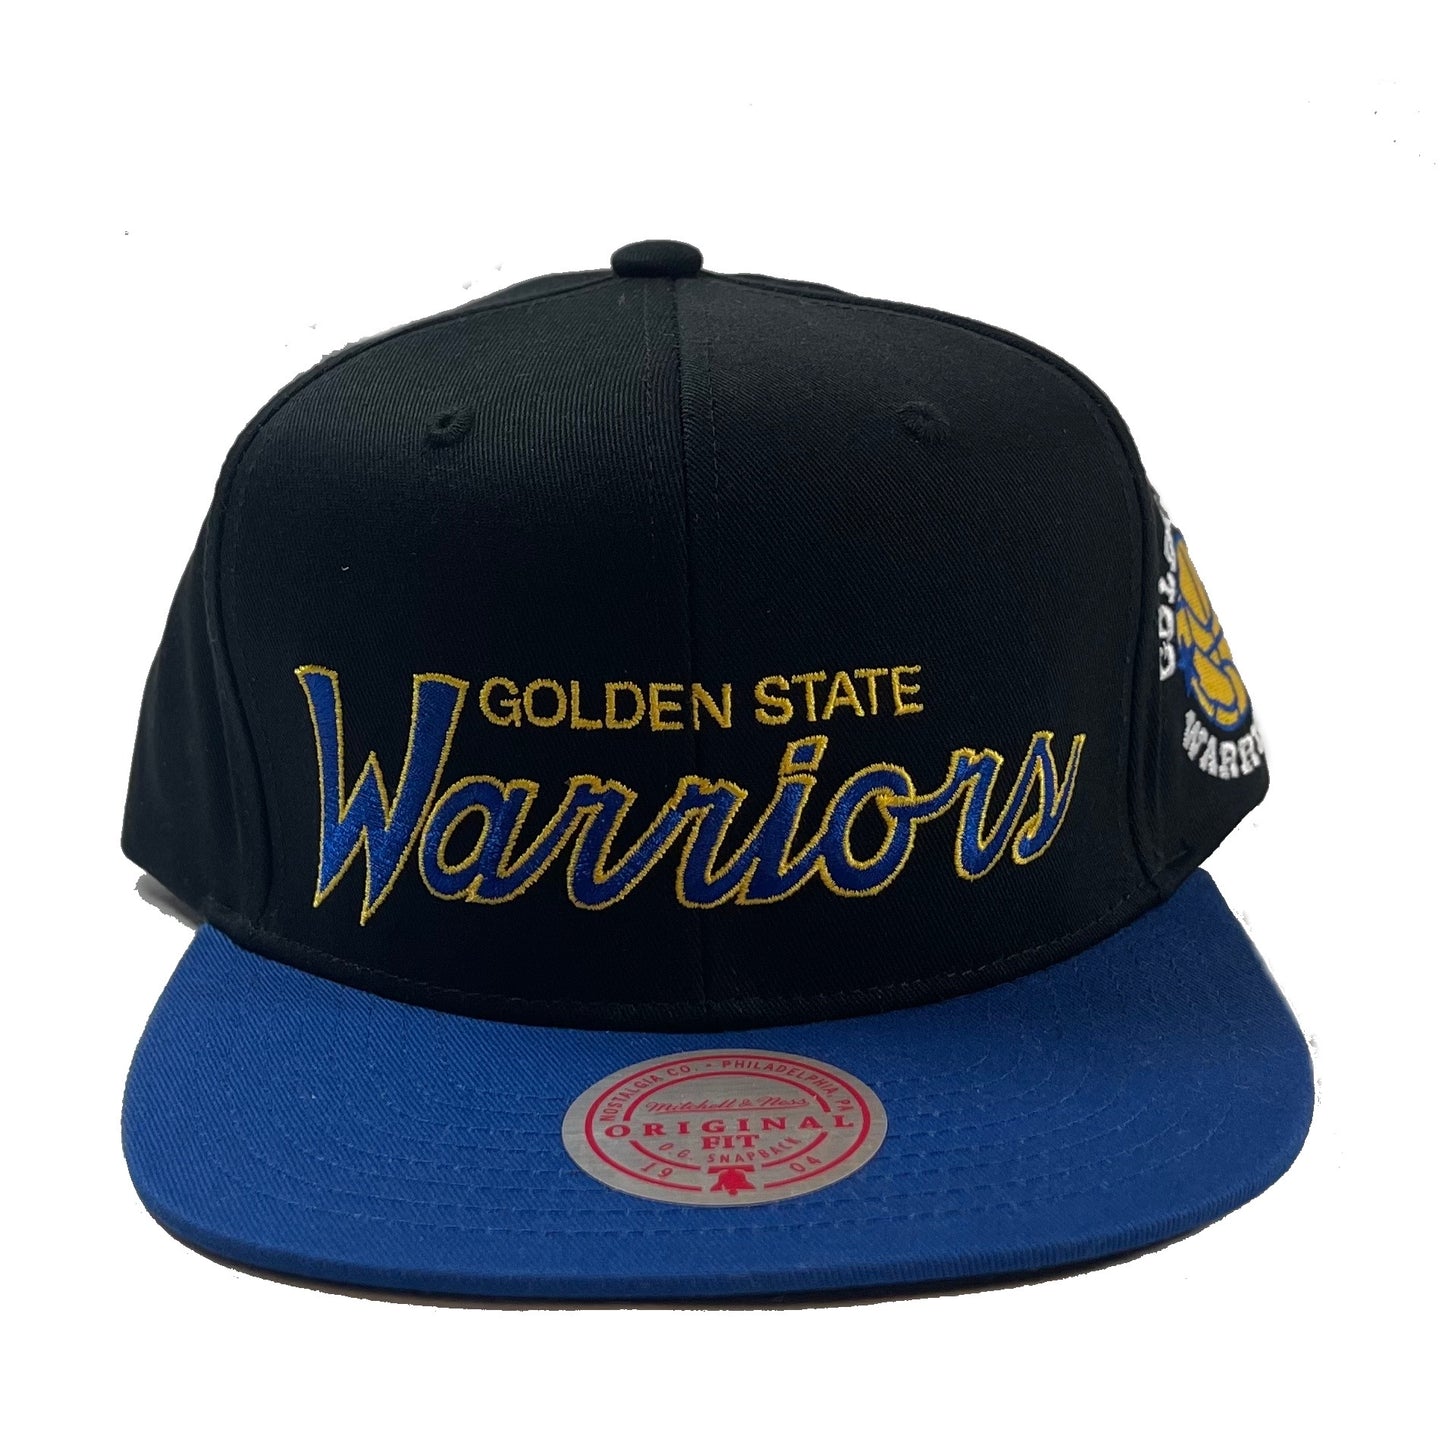 Golden State Warriors (Black) Snapback